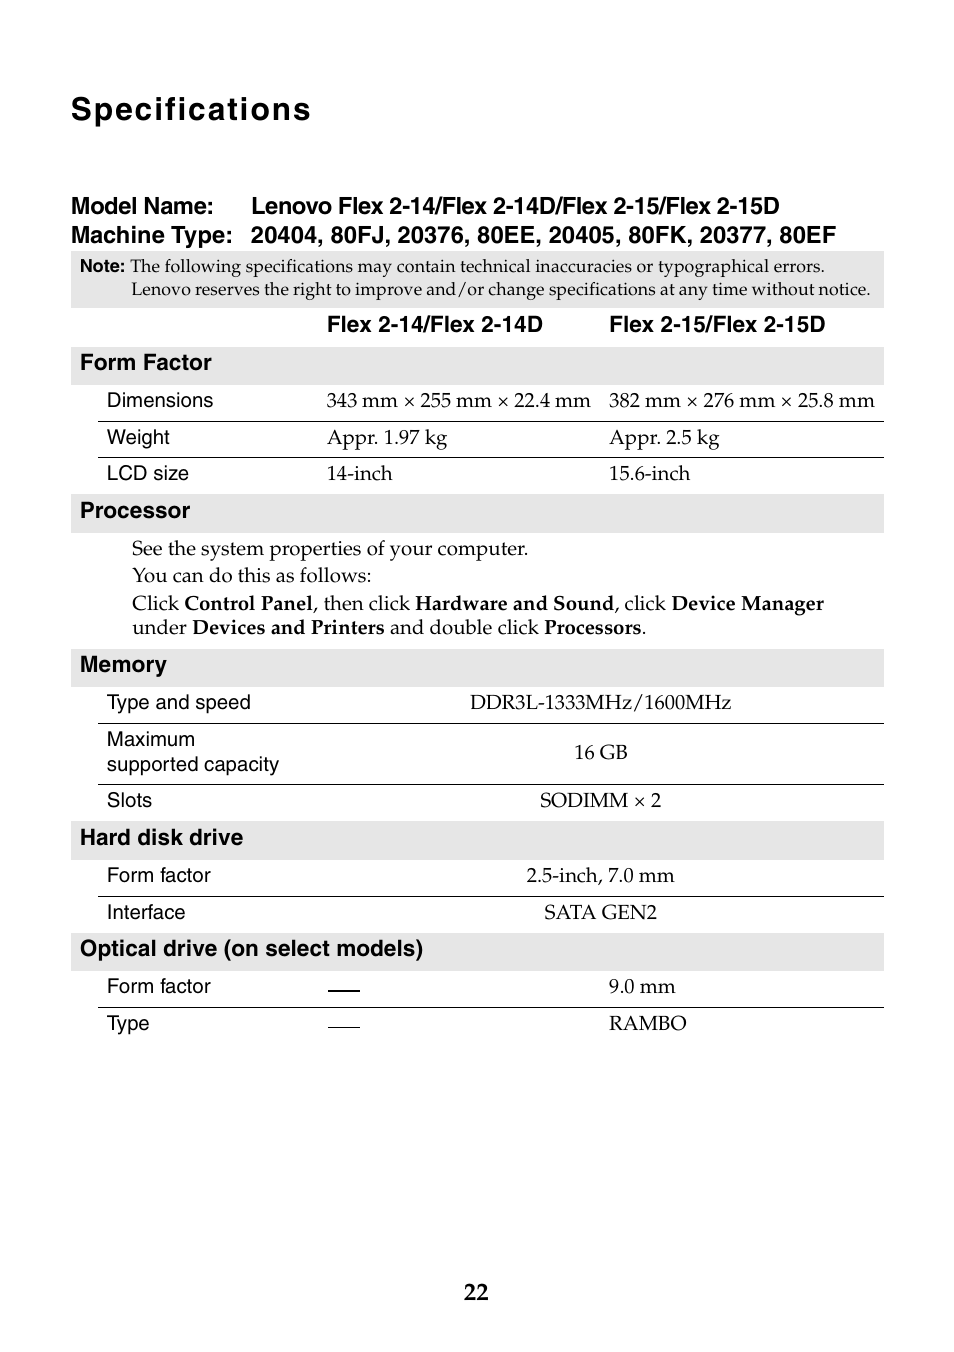 Specifications | Lenovo Flex 2-14 Notebook Lenovo User Manual | Page 22